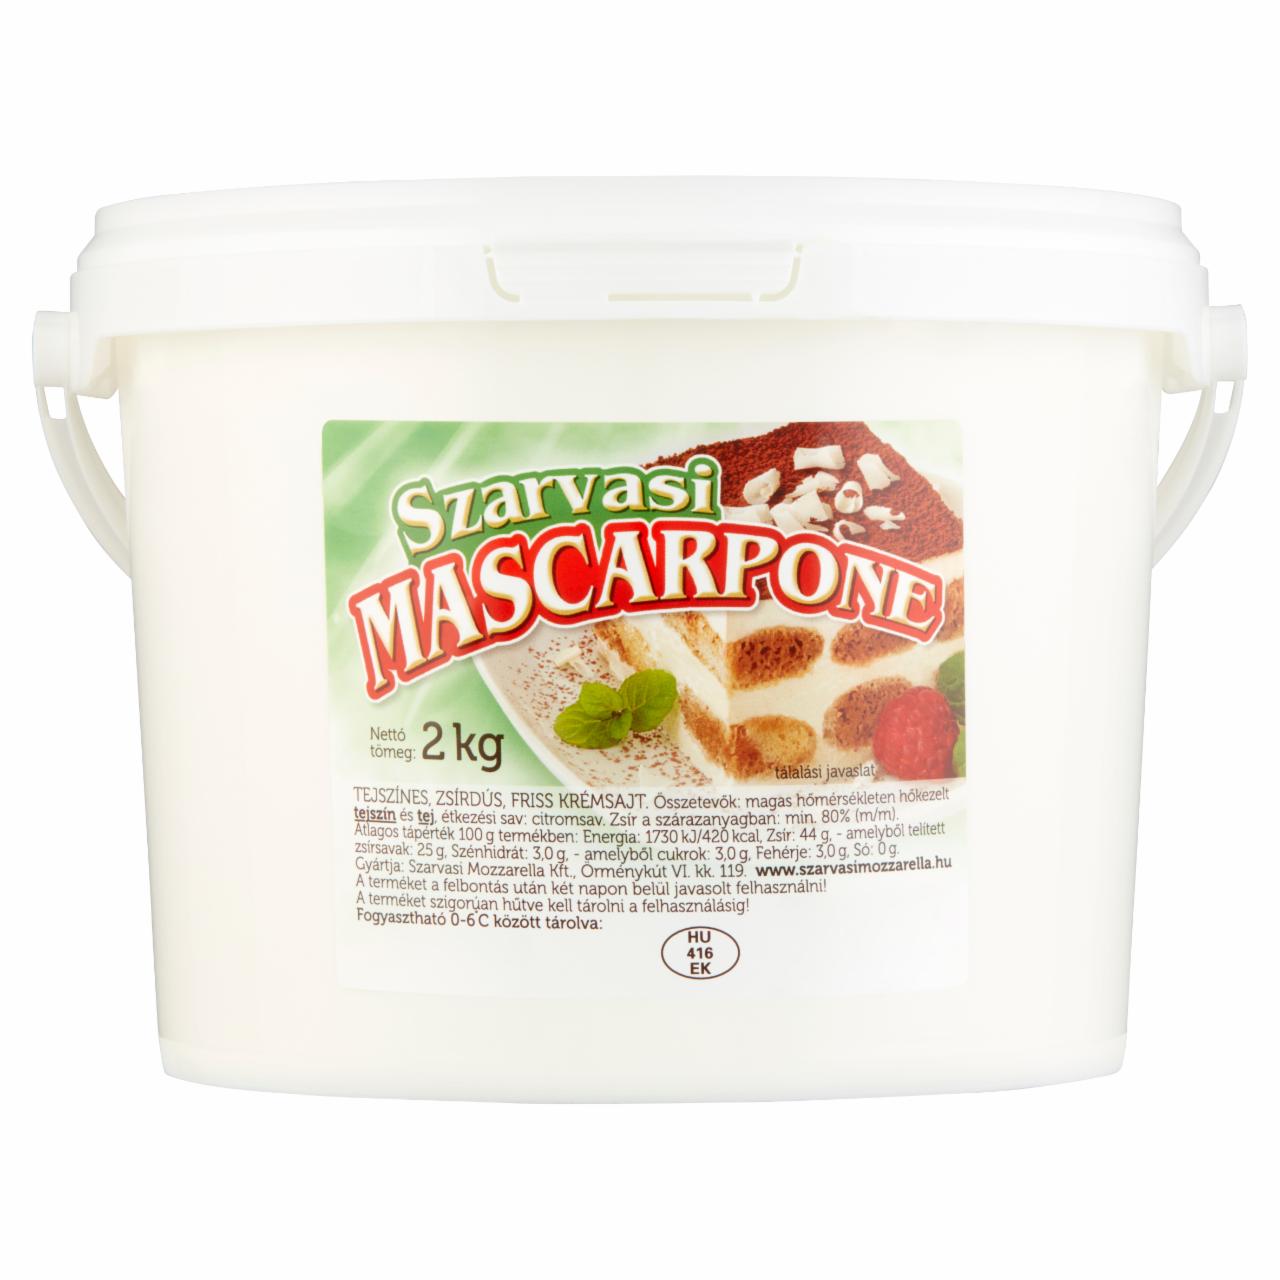 Képek - Szarvasi mascarpone krémsajt 2 kg